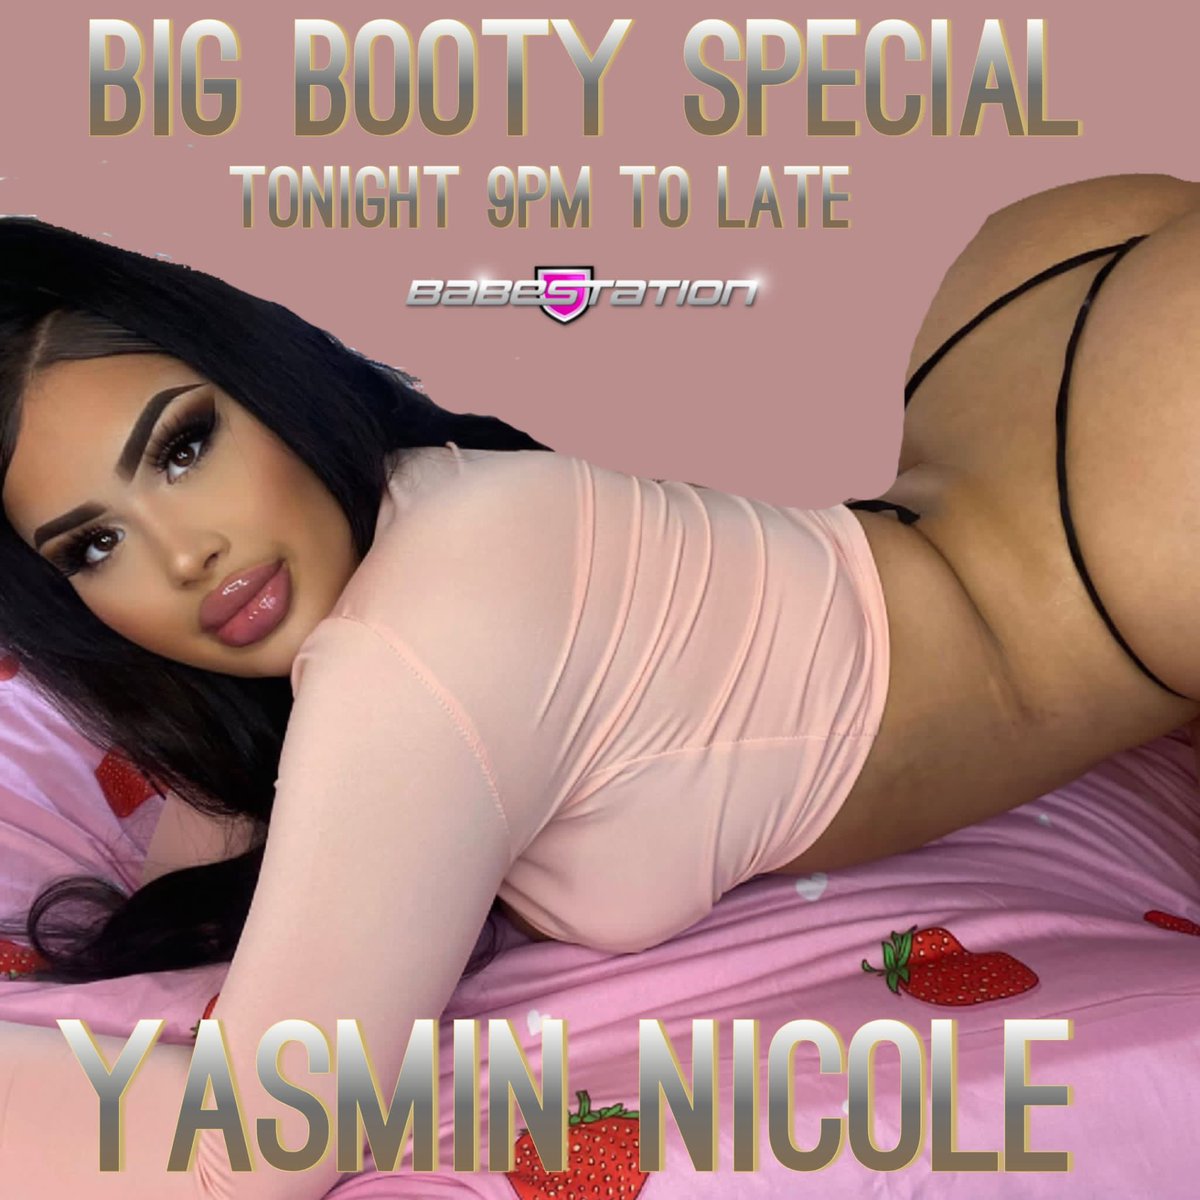 Big Booty show with the gorgeous Yasmin Nicole 
#BootyBeauty #bootyoftheday #camgirl #babestation https://t.co/TVgJZNemTA